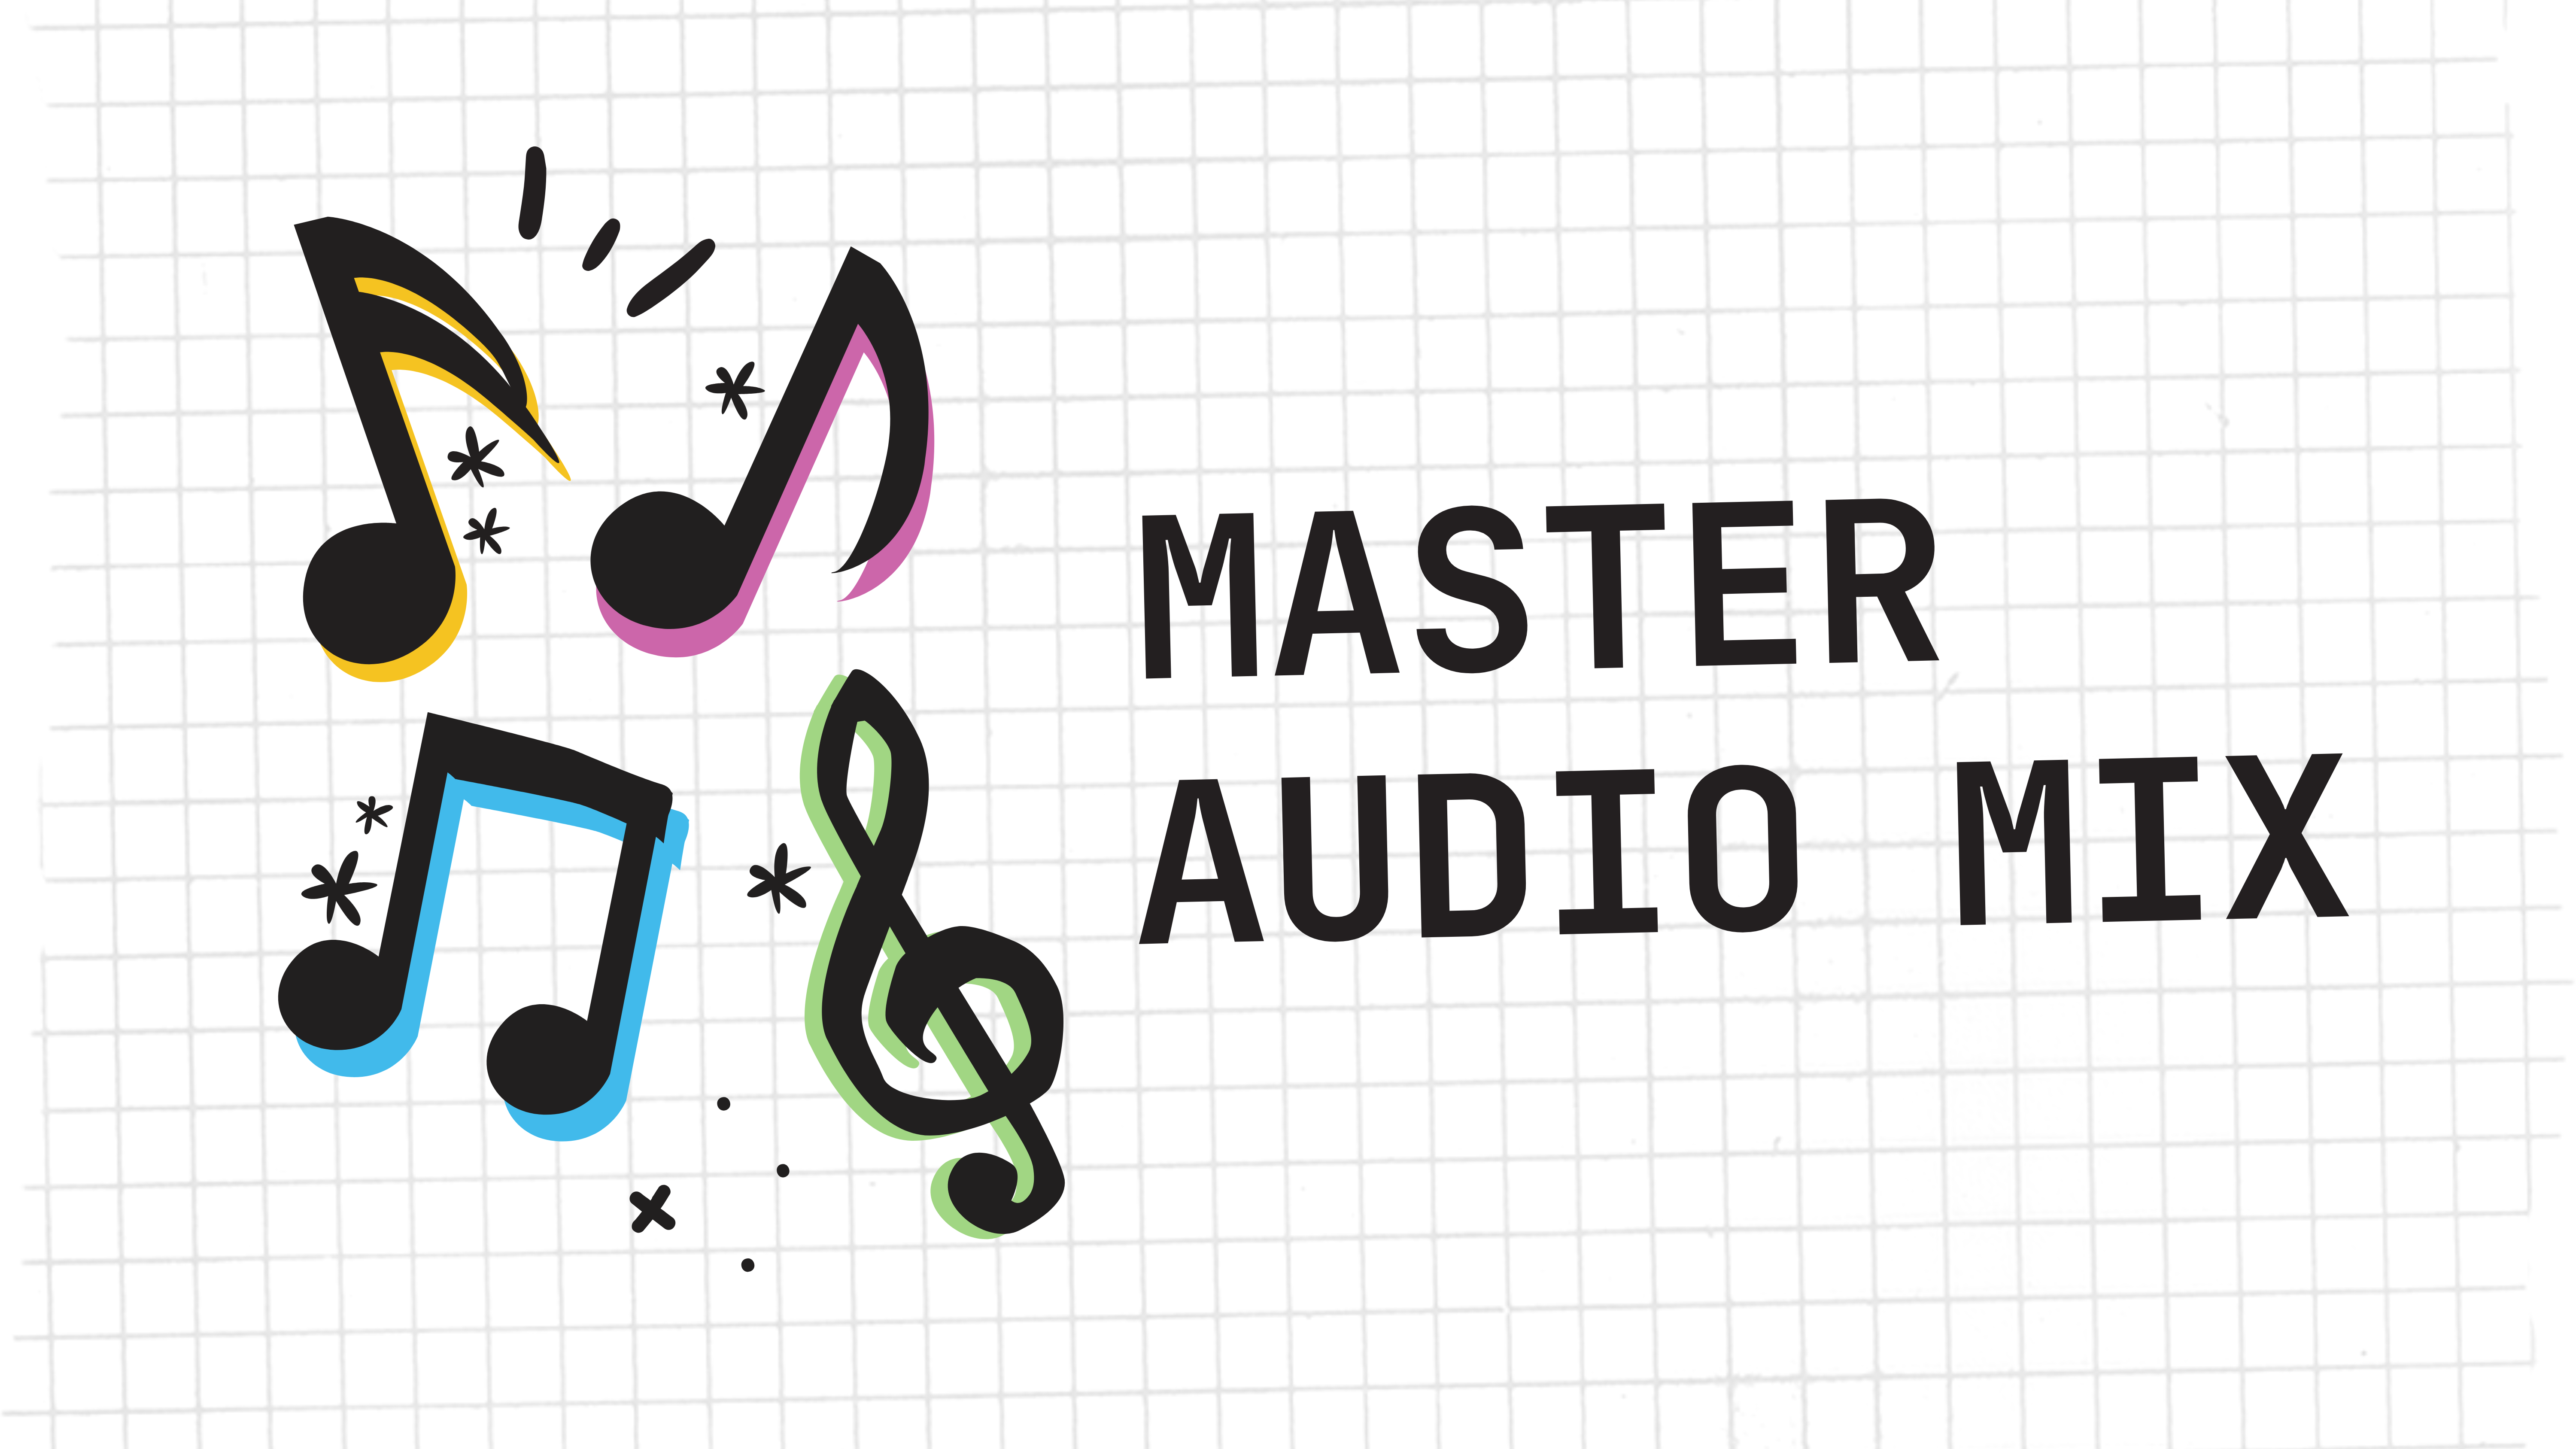 Master audio mix